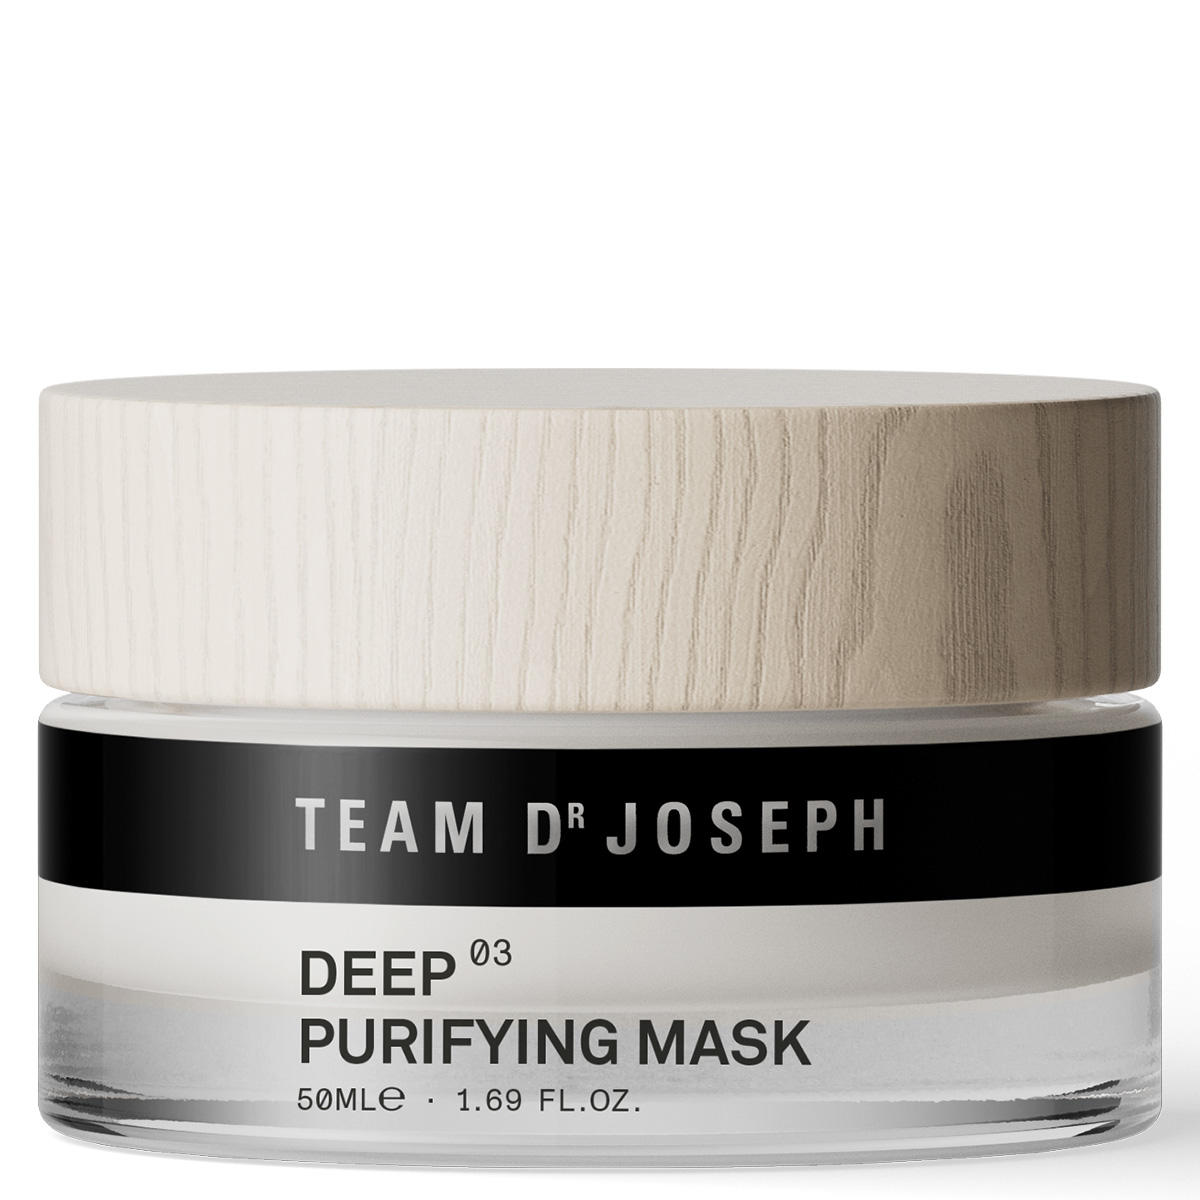 TEAM DR JOSEPH Deep Purifying Mask 50 ml - 1